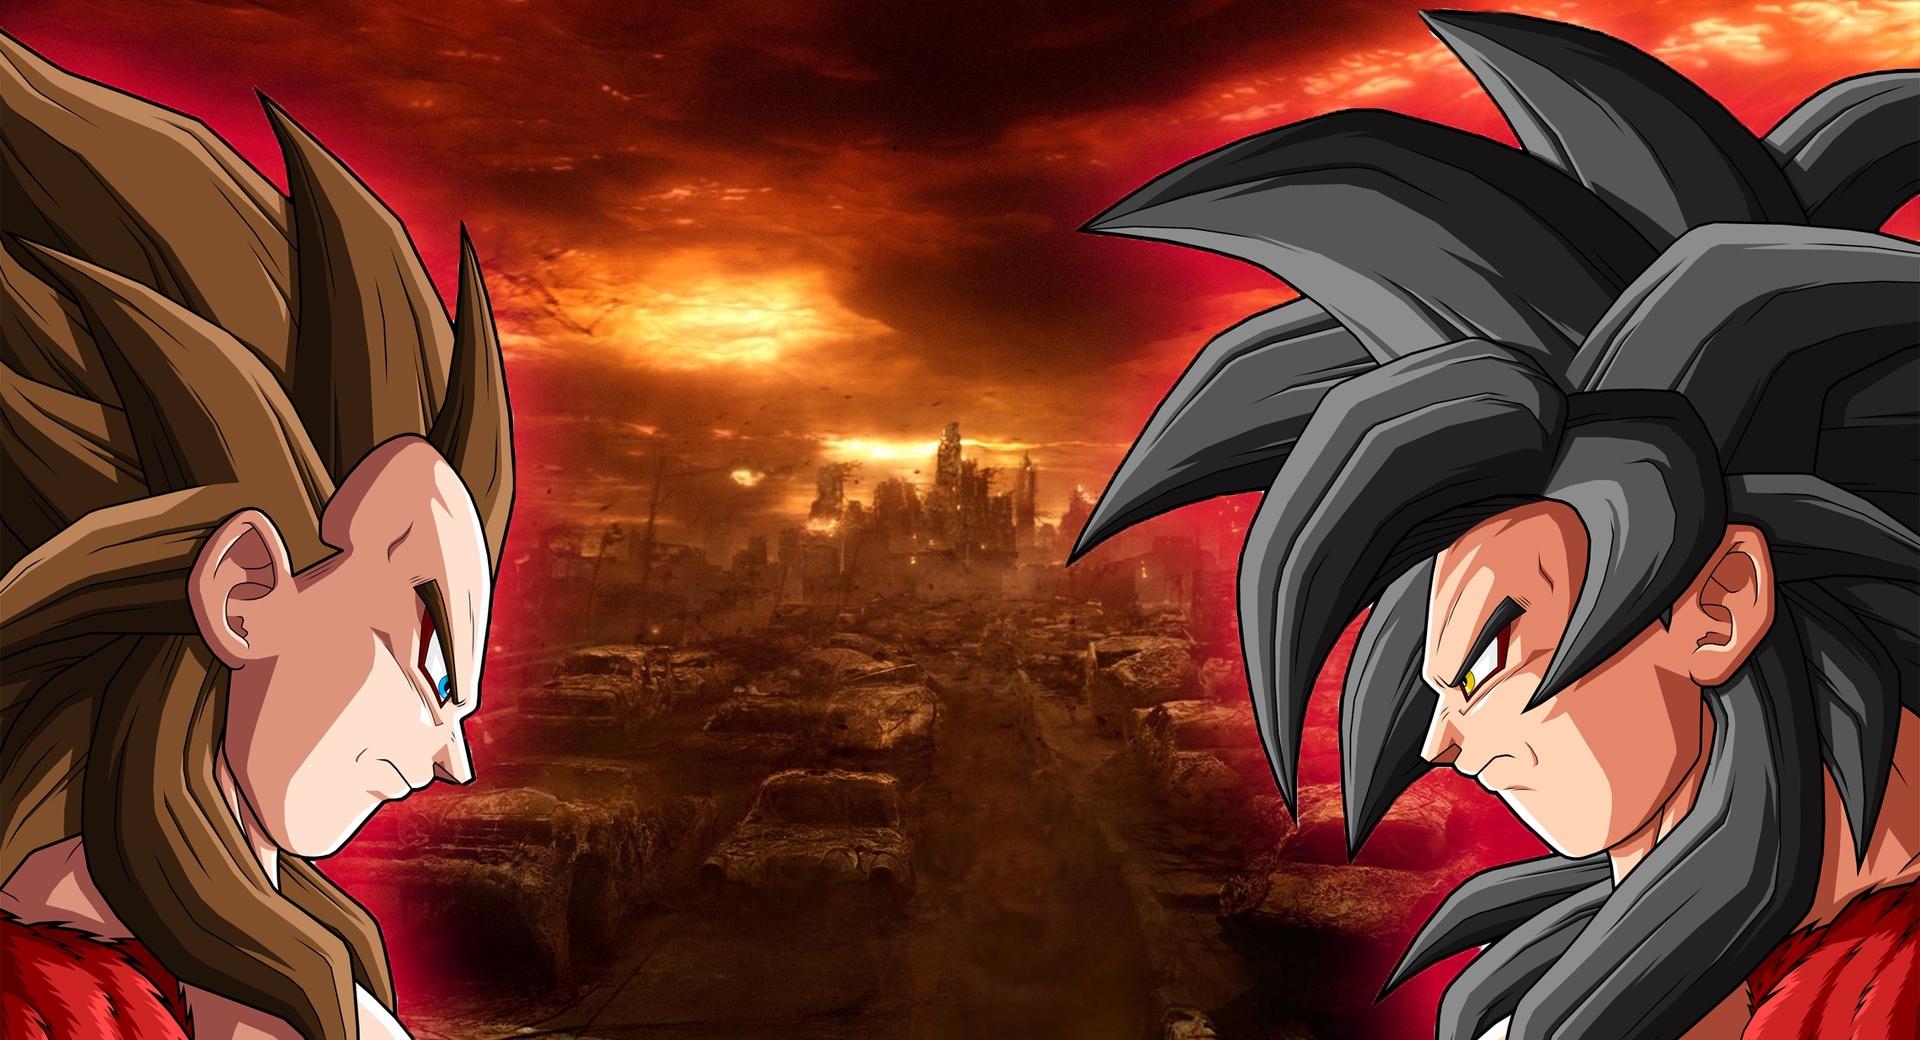 DBZ SS4 Goku vs Vegeta wallpapers HD quality